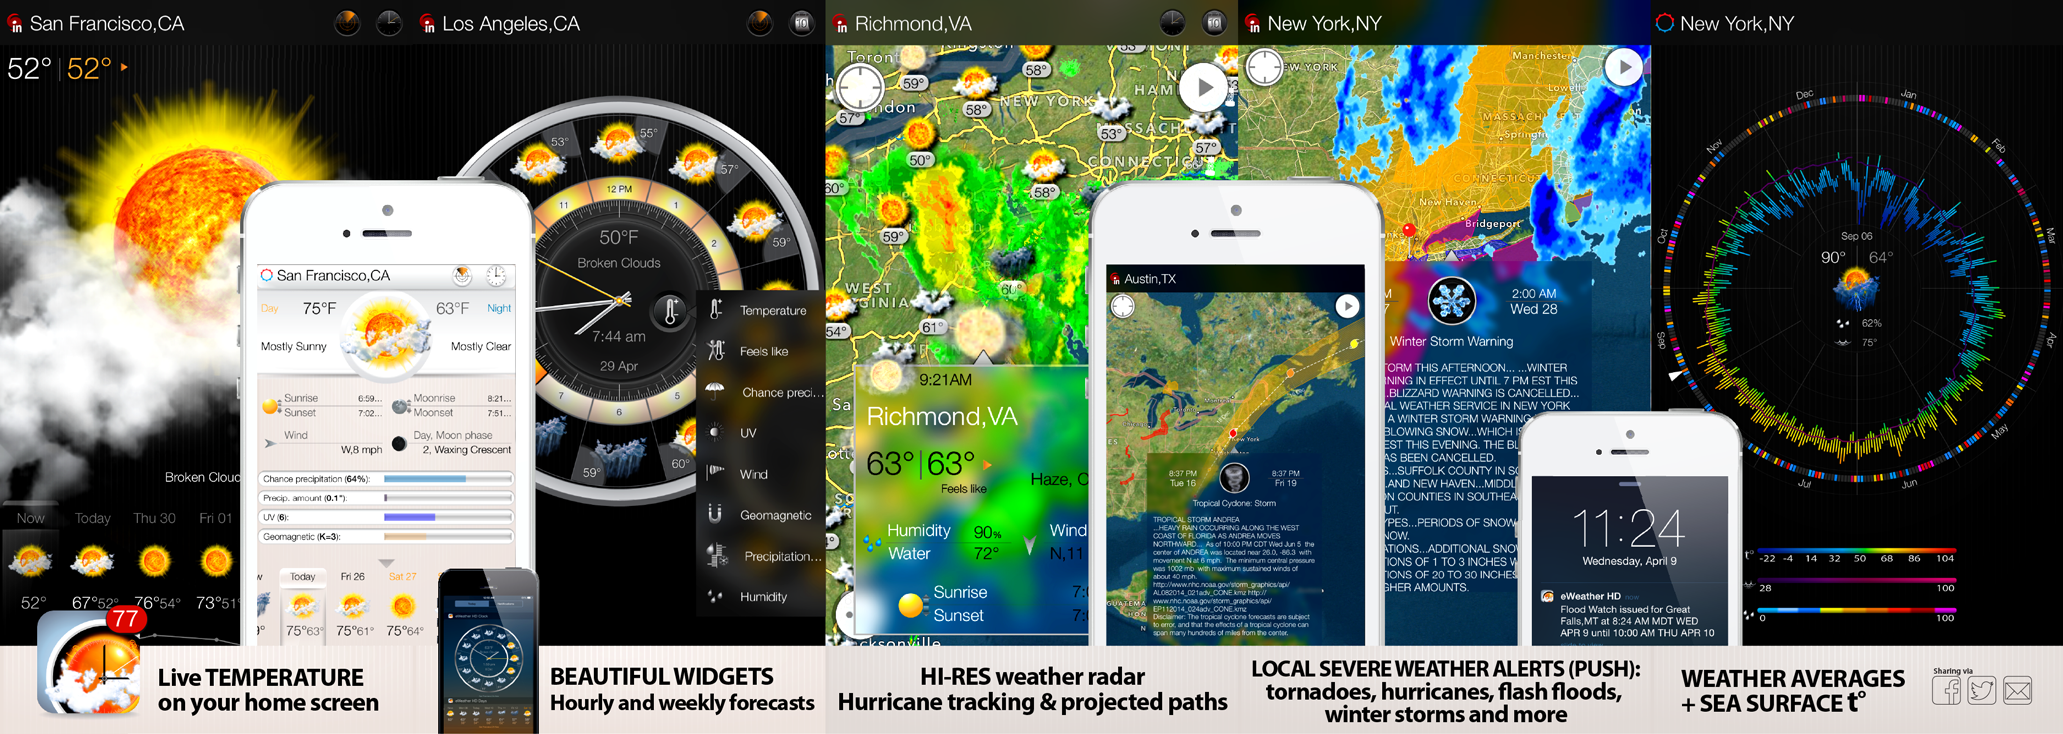 eweather-hd-weather-app-iphone-ipad-alerts-radar-long-range-weather-storm-tracker-earthquakes-buoy-finder-earthquakes-10-day-weather-hourly-weather-meteo-alarms-iphone-ipad-55.png